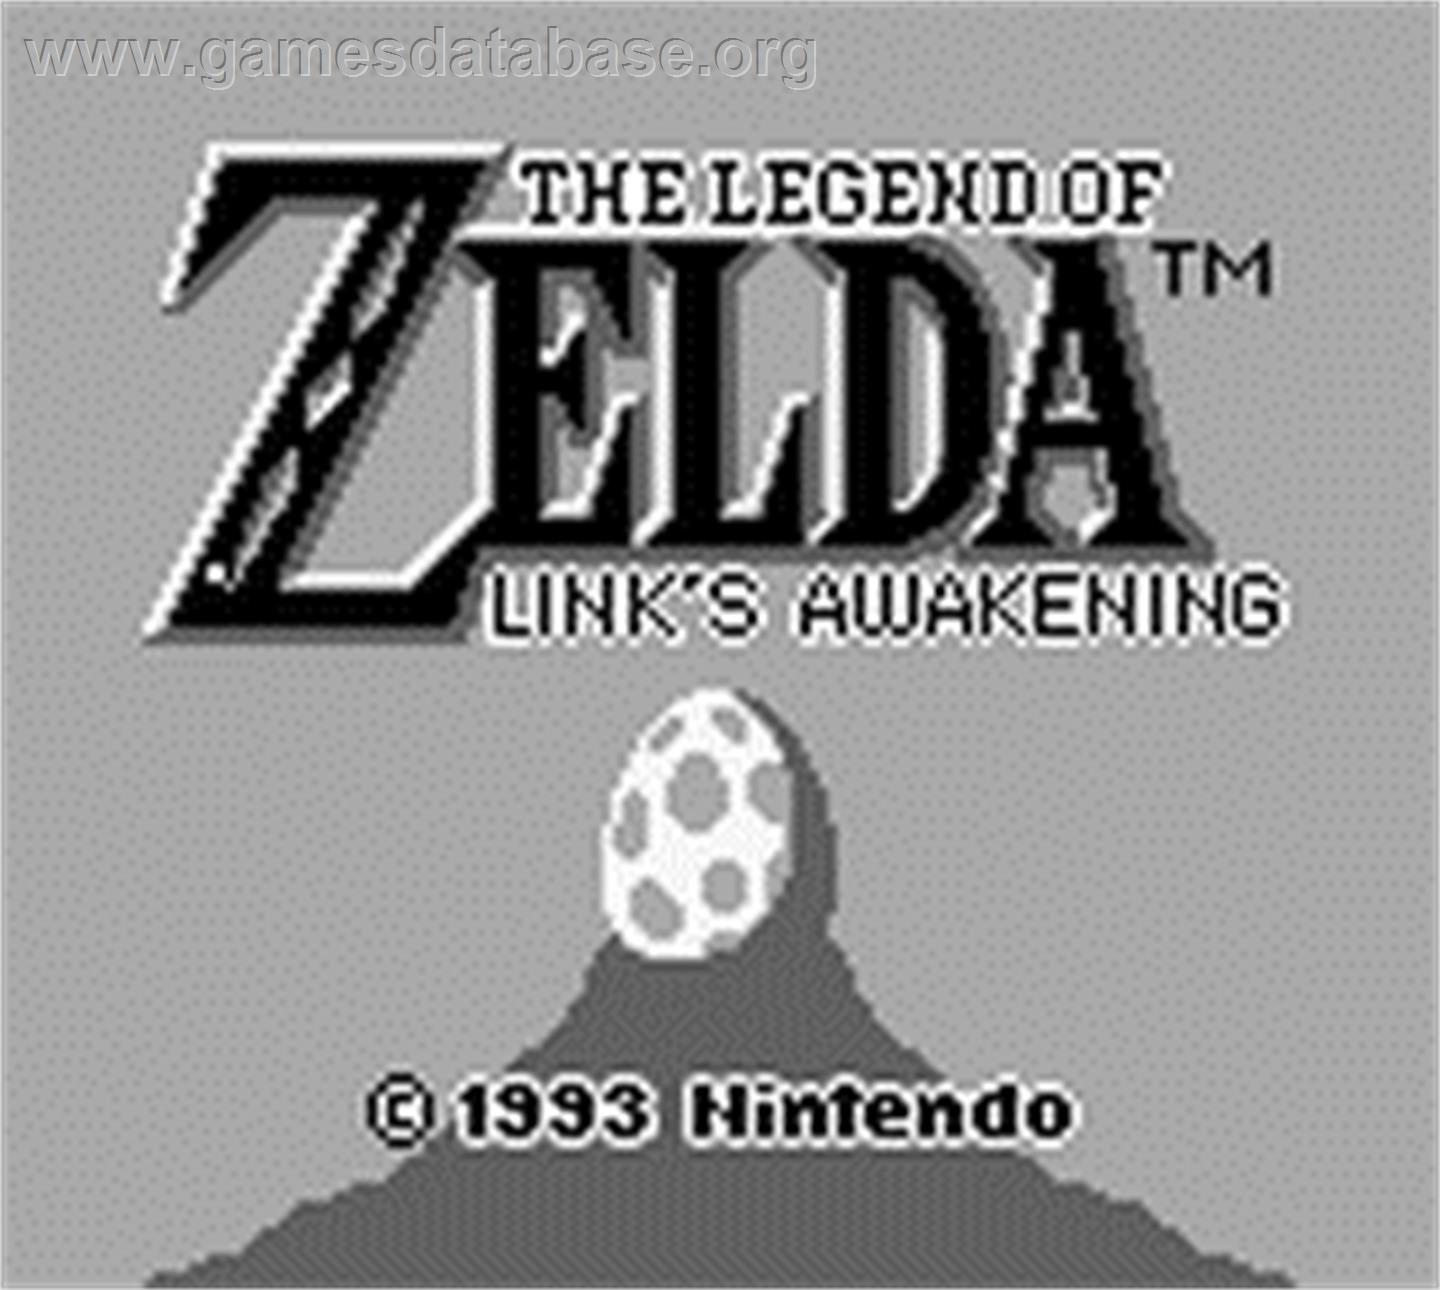 Legend of Zelda: Link's Awakening - Nintendo Game Boy - Artwork - Title Screen